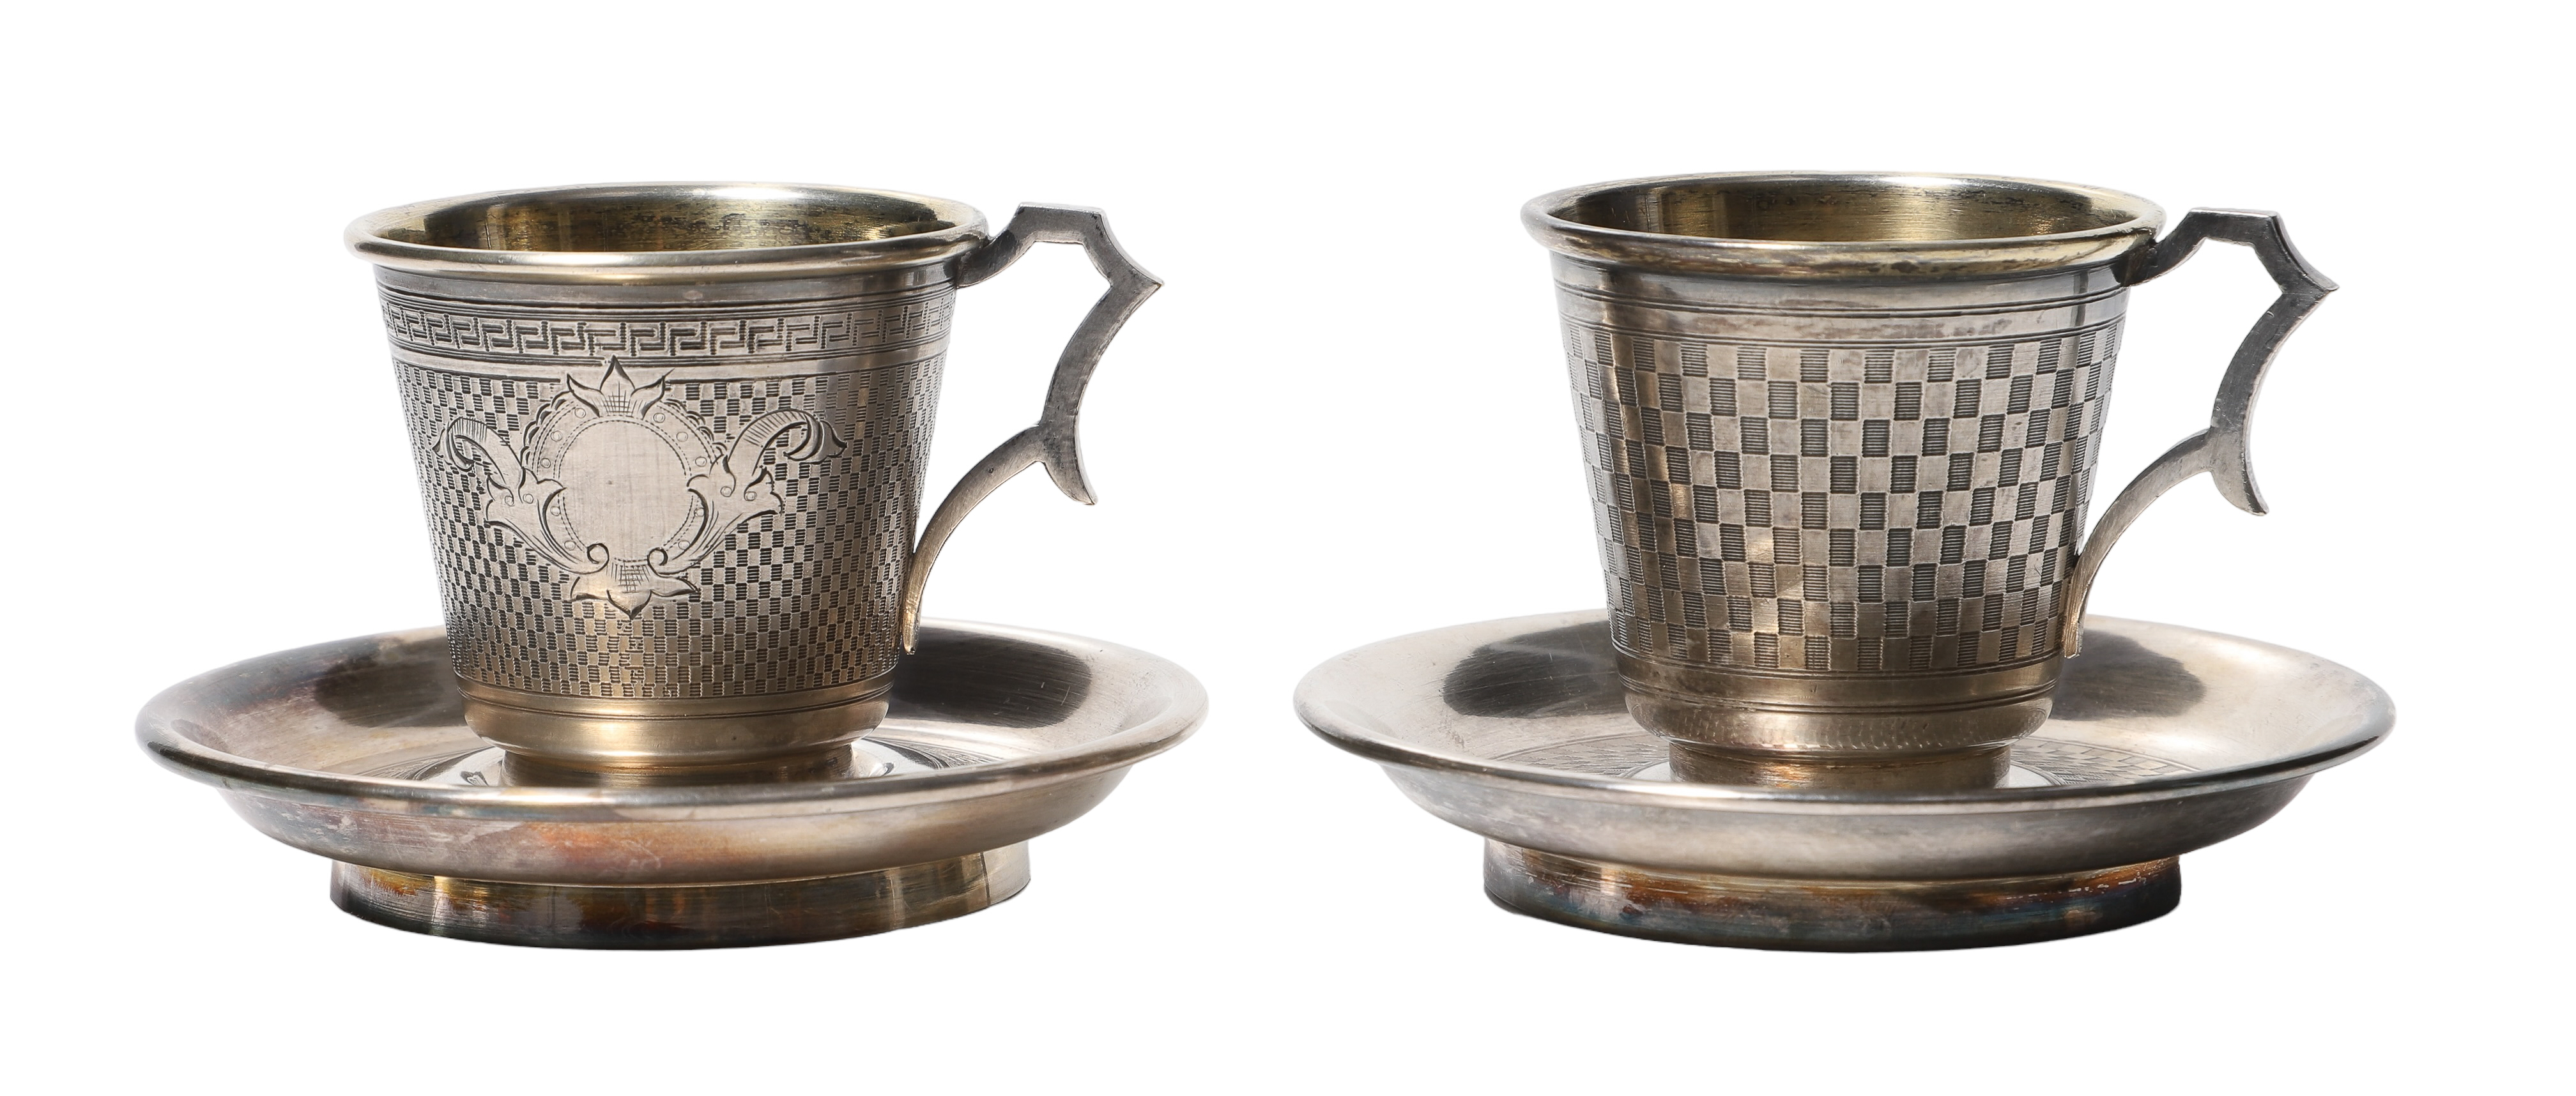 (2) Warszawa silverplate teacups